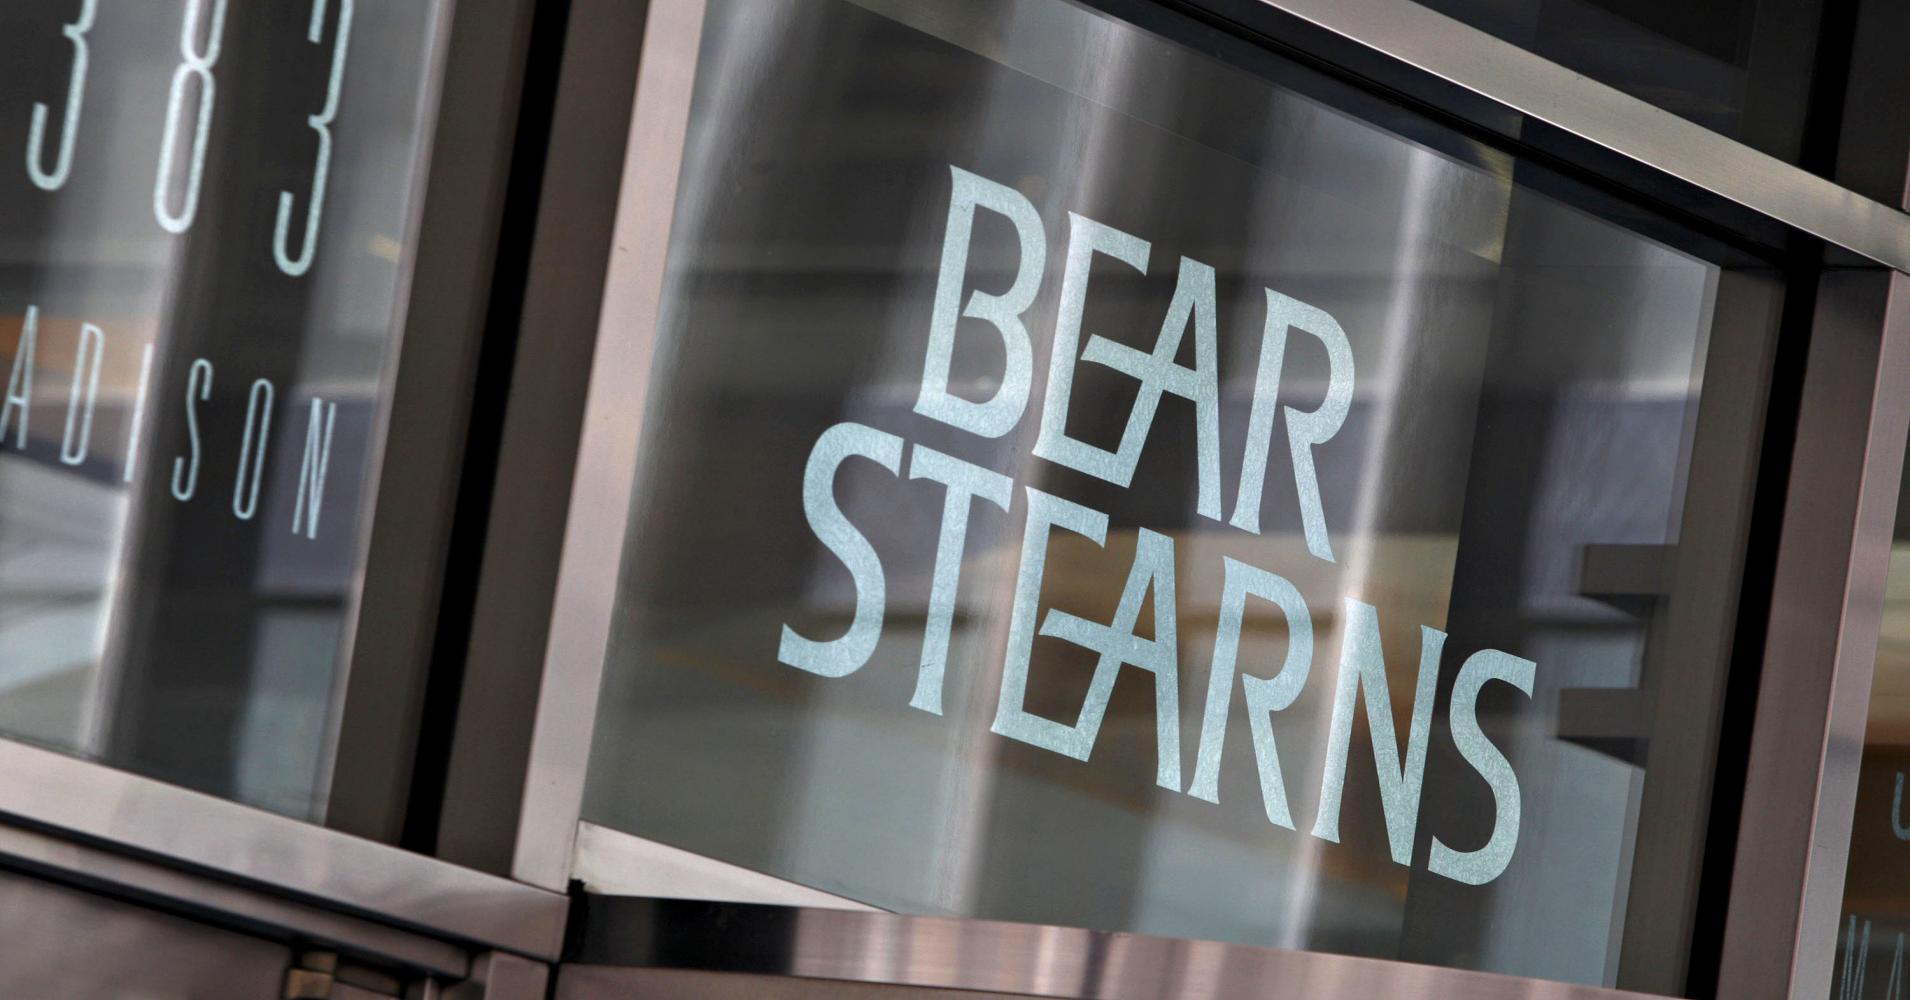 Bear Stearns Liquidity Risk Crisis - Case Study